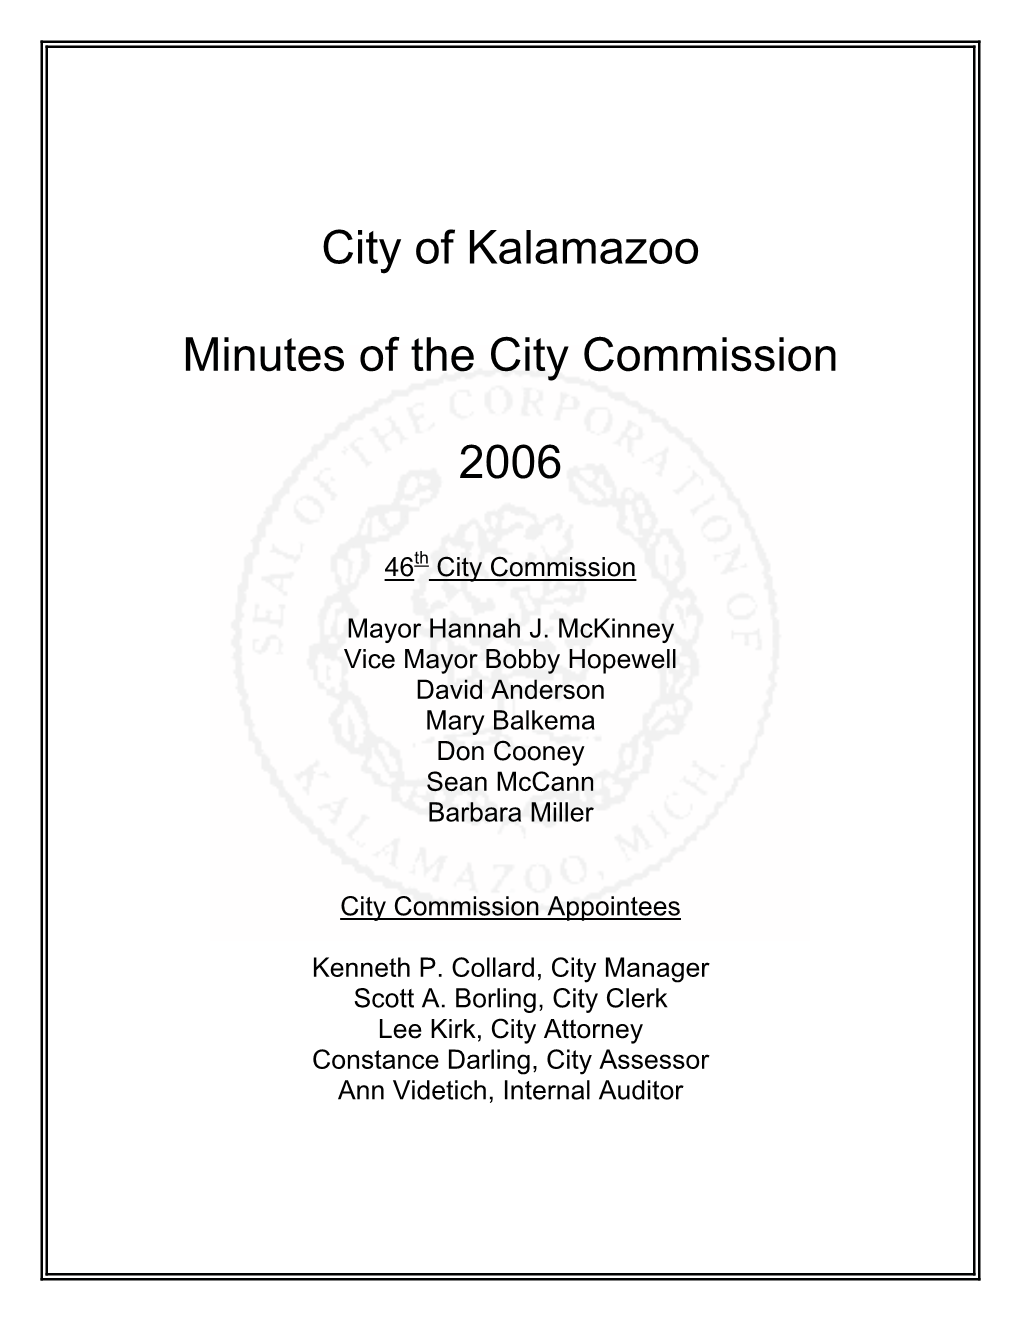 2006 City Commission Minutes